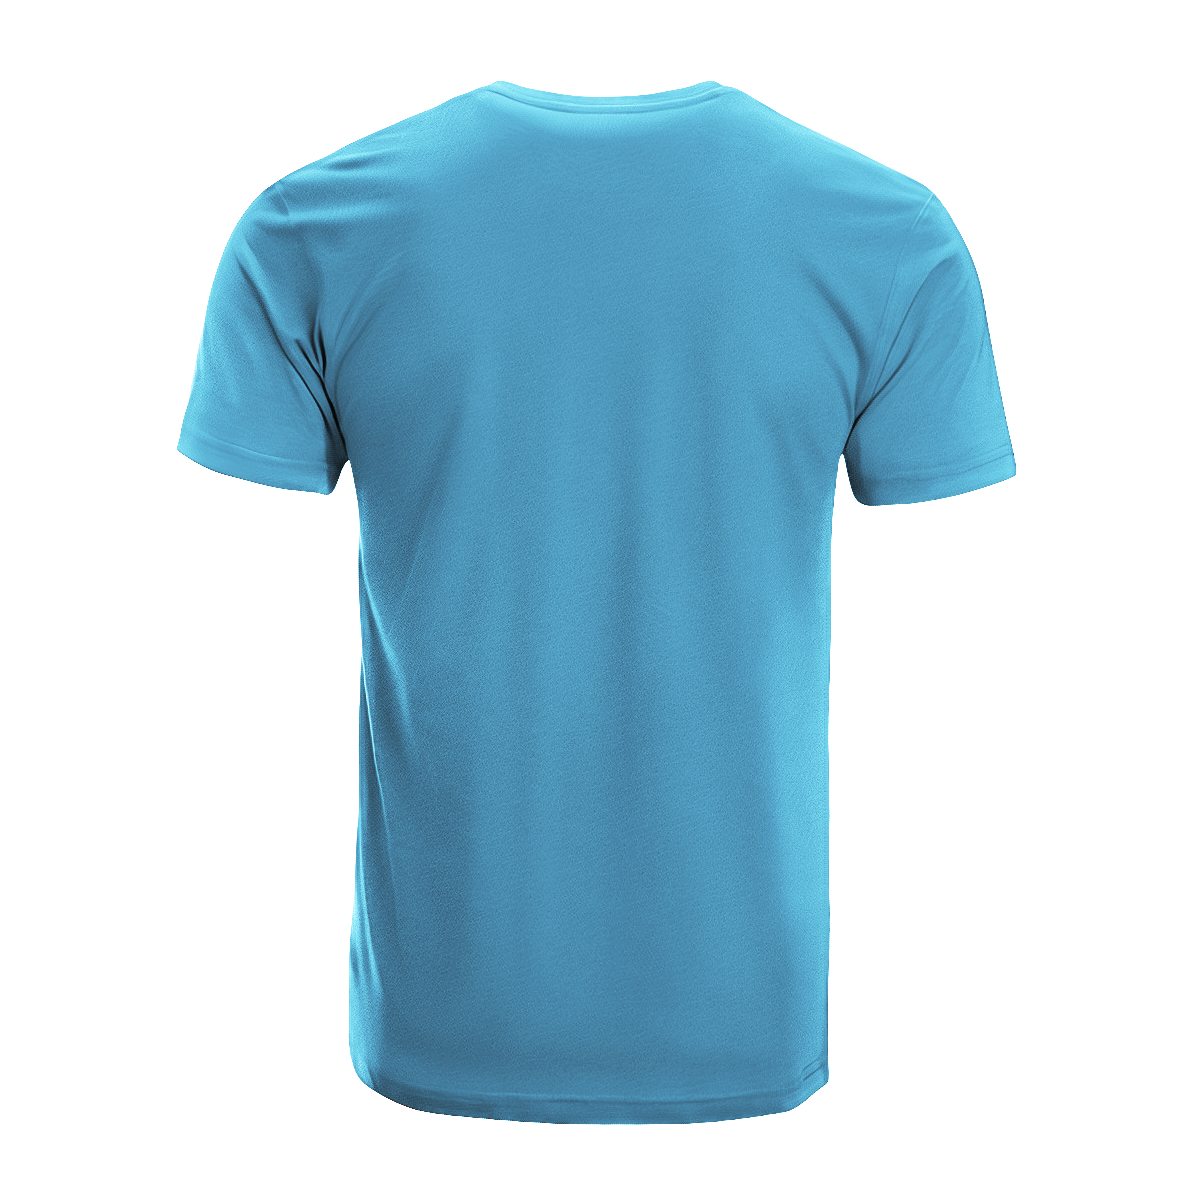 MacTavish Tartan Crest T-shirt - I'm not yelling style